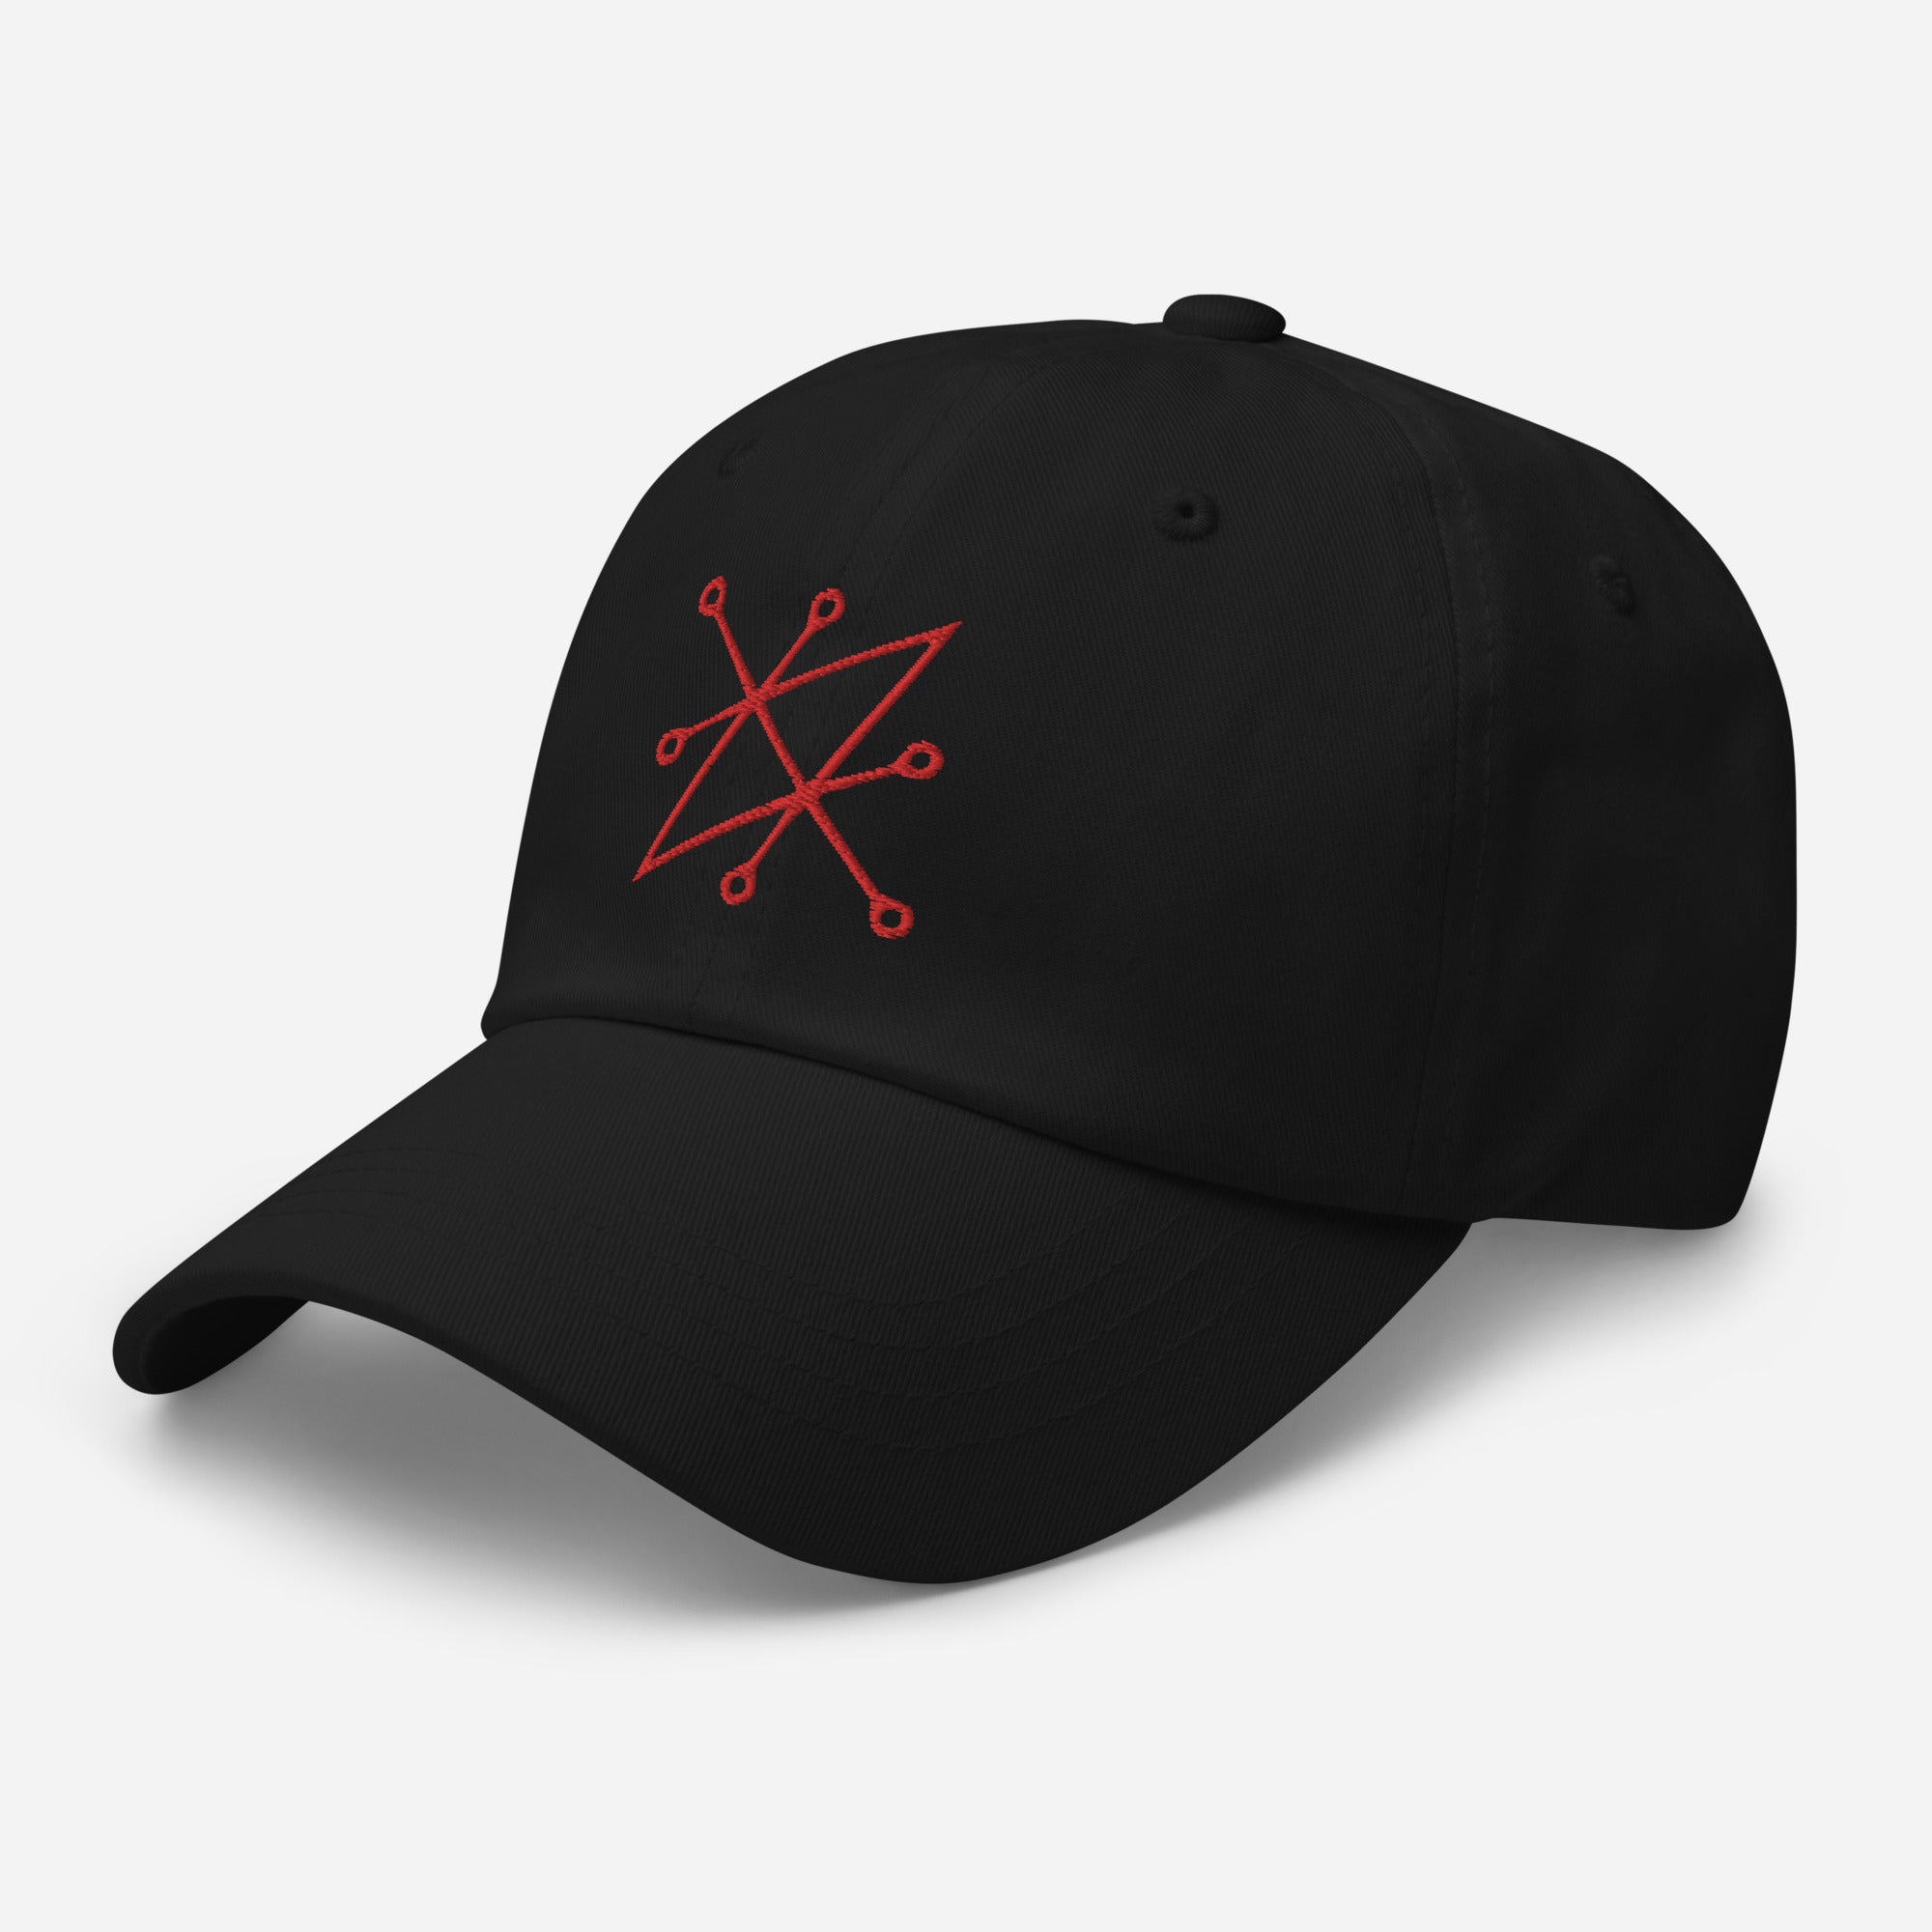 Red Sigil of Fallen Angel Azazel Occult Symbol Embroidered Baseball Cap Dad hat